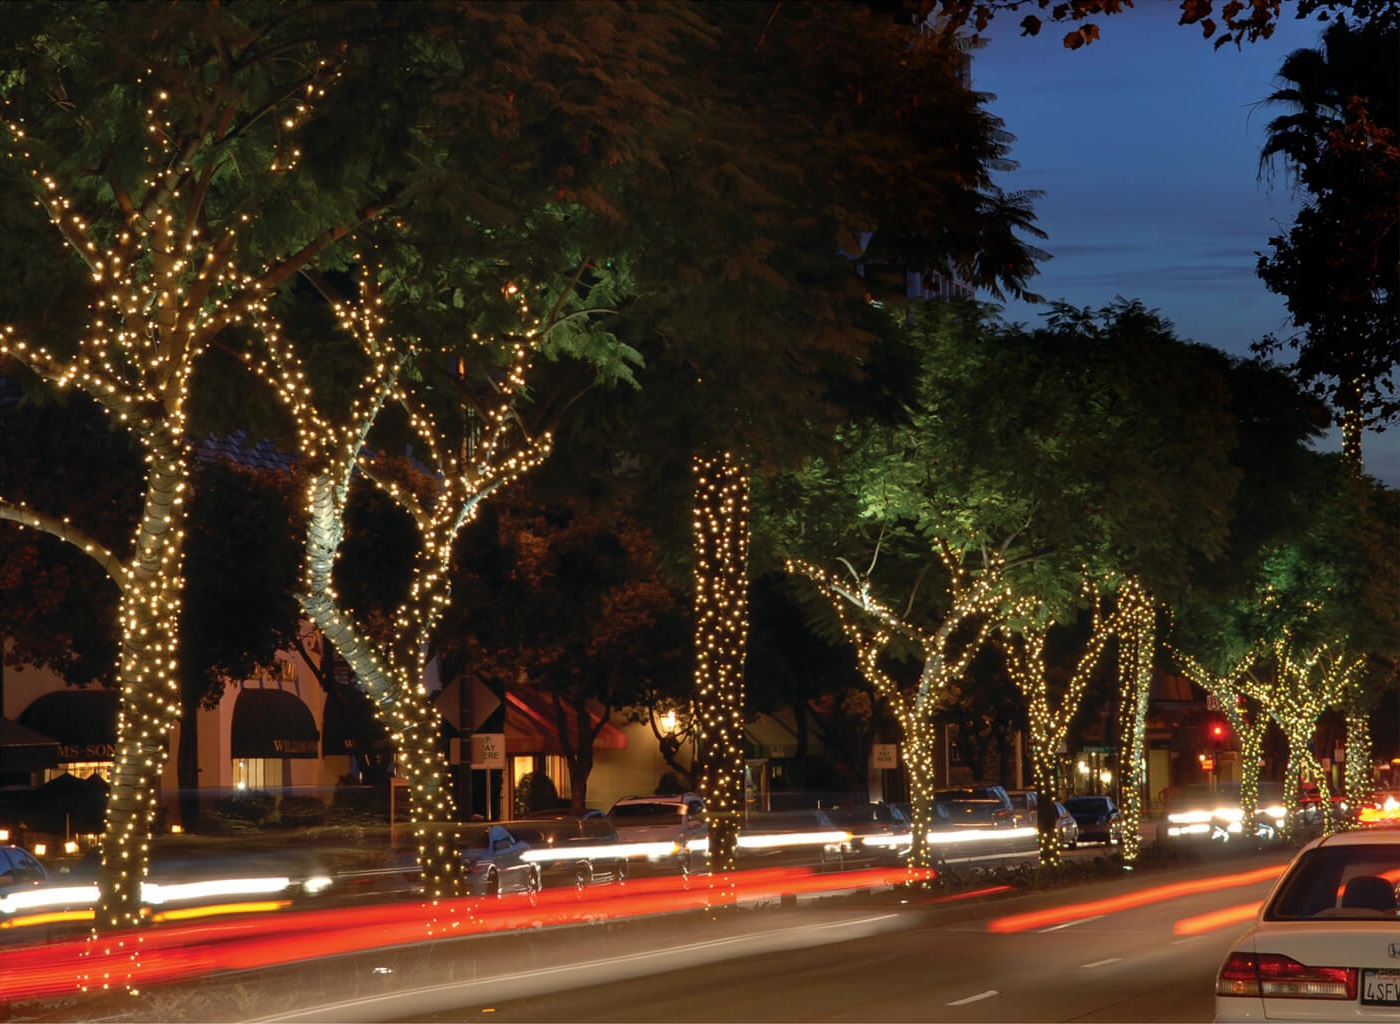 Trees with Christmas lights